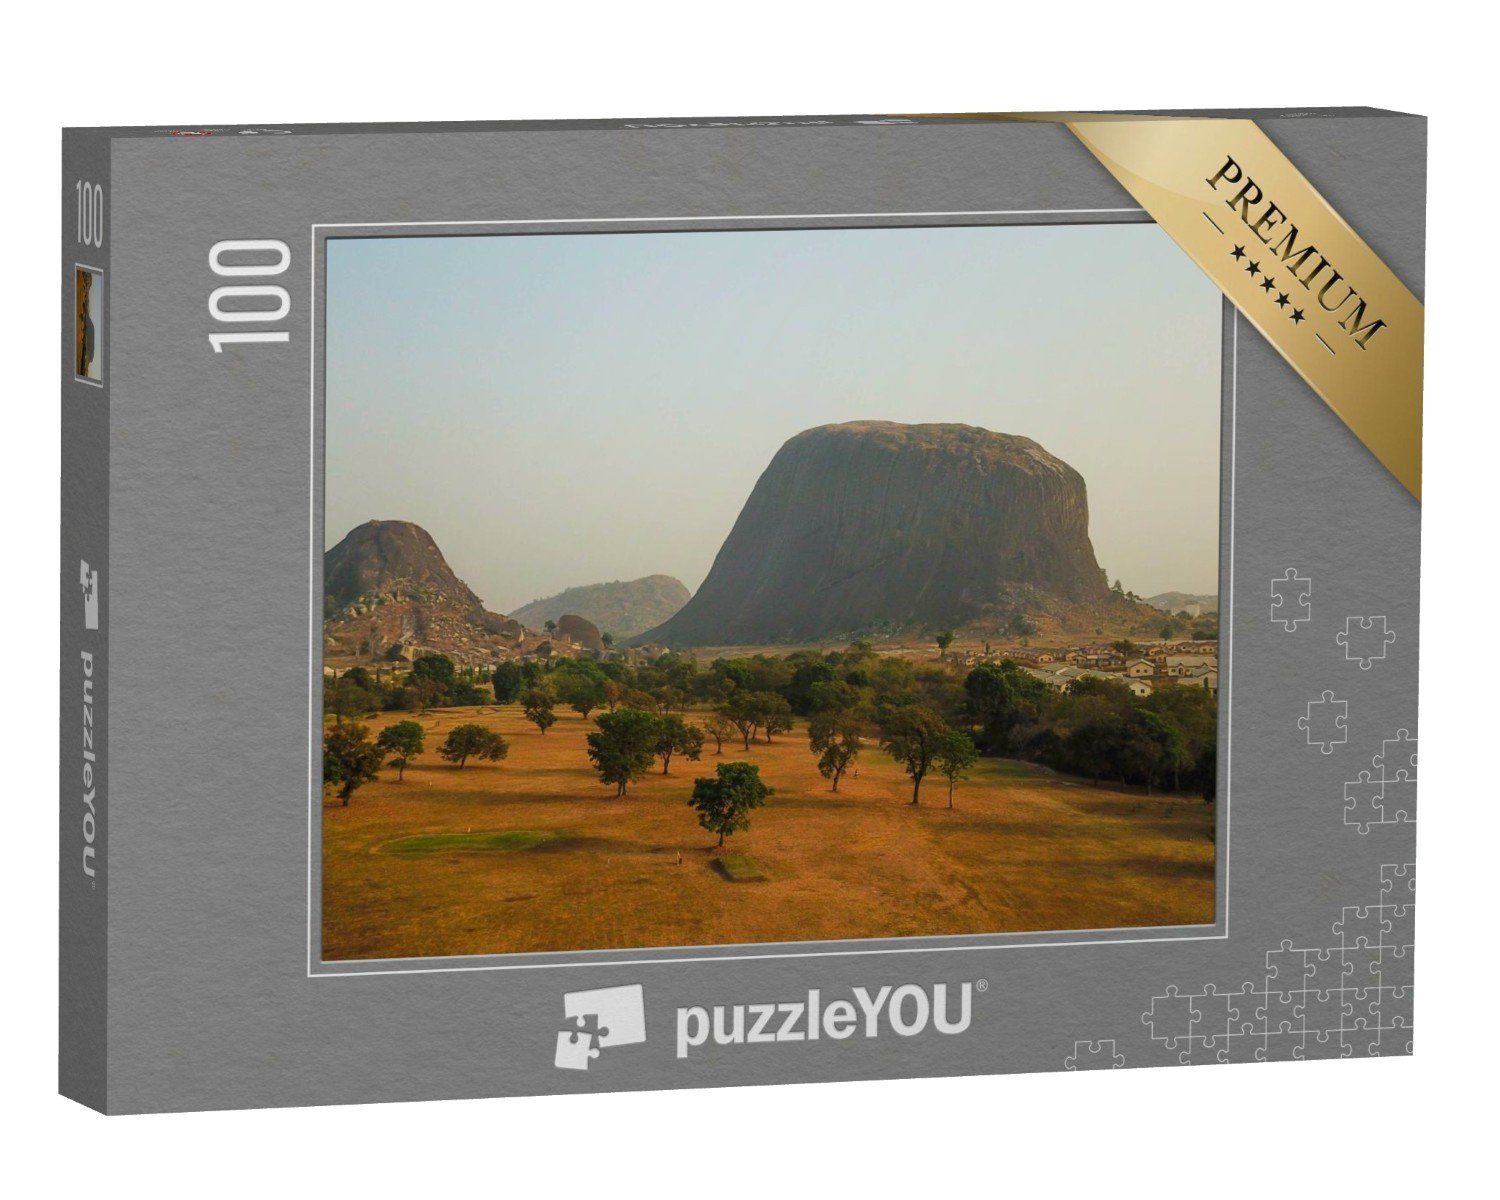 puzzleYOU Puzzle Mächtiger Zuma Rock, Niger State, Nigeria, 100 Puzzleteile, puzzleYOU-Kollektionen Felsen